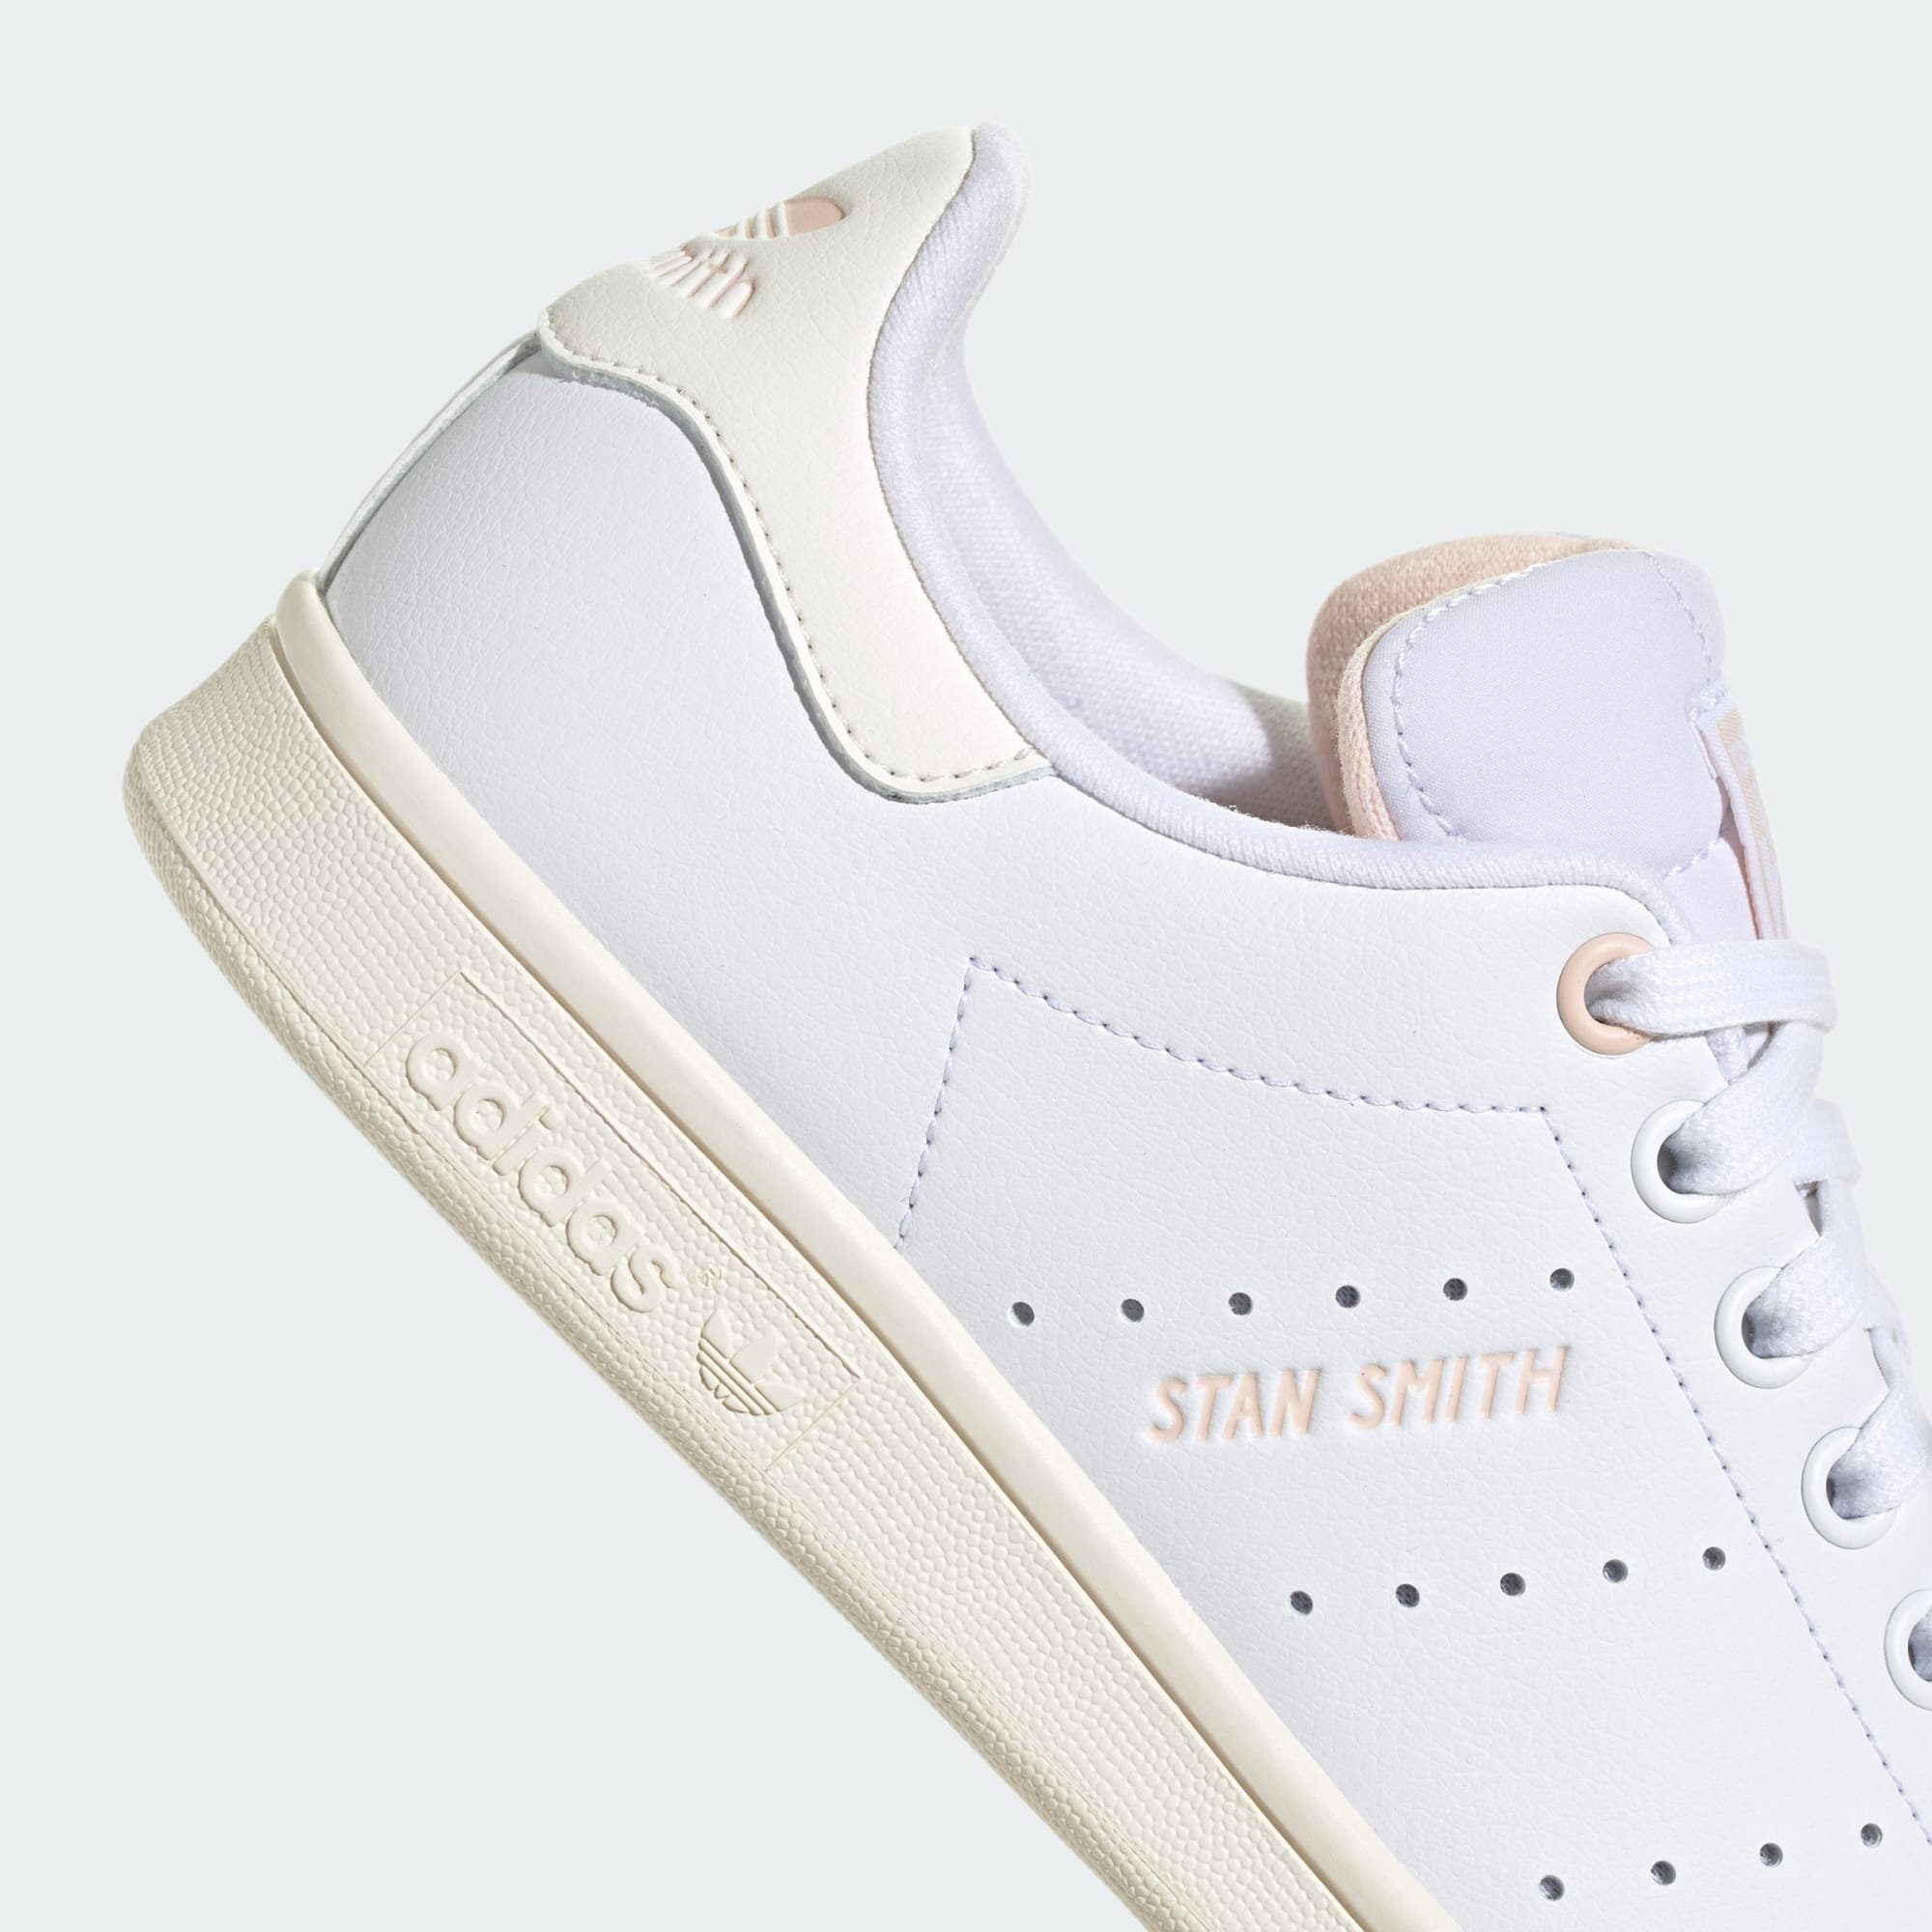 SCHUH adidas SMITH Sneaker STAN Originals